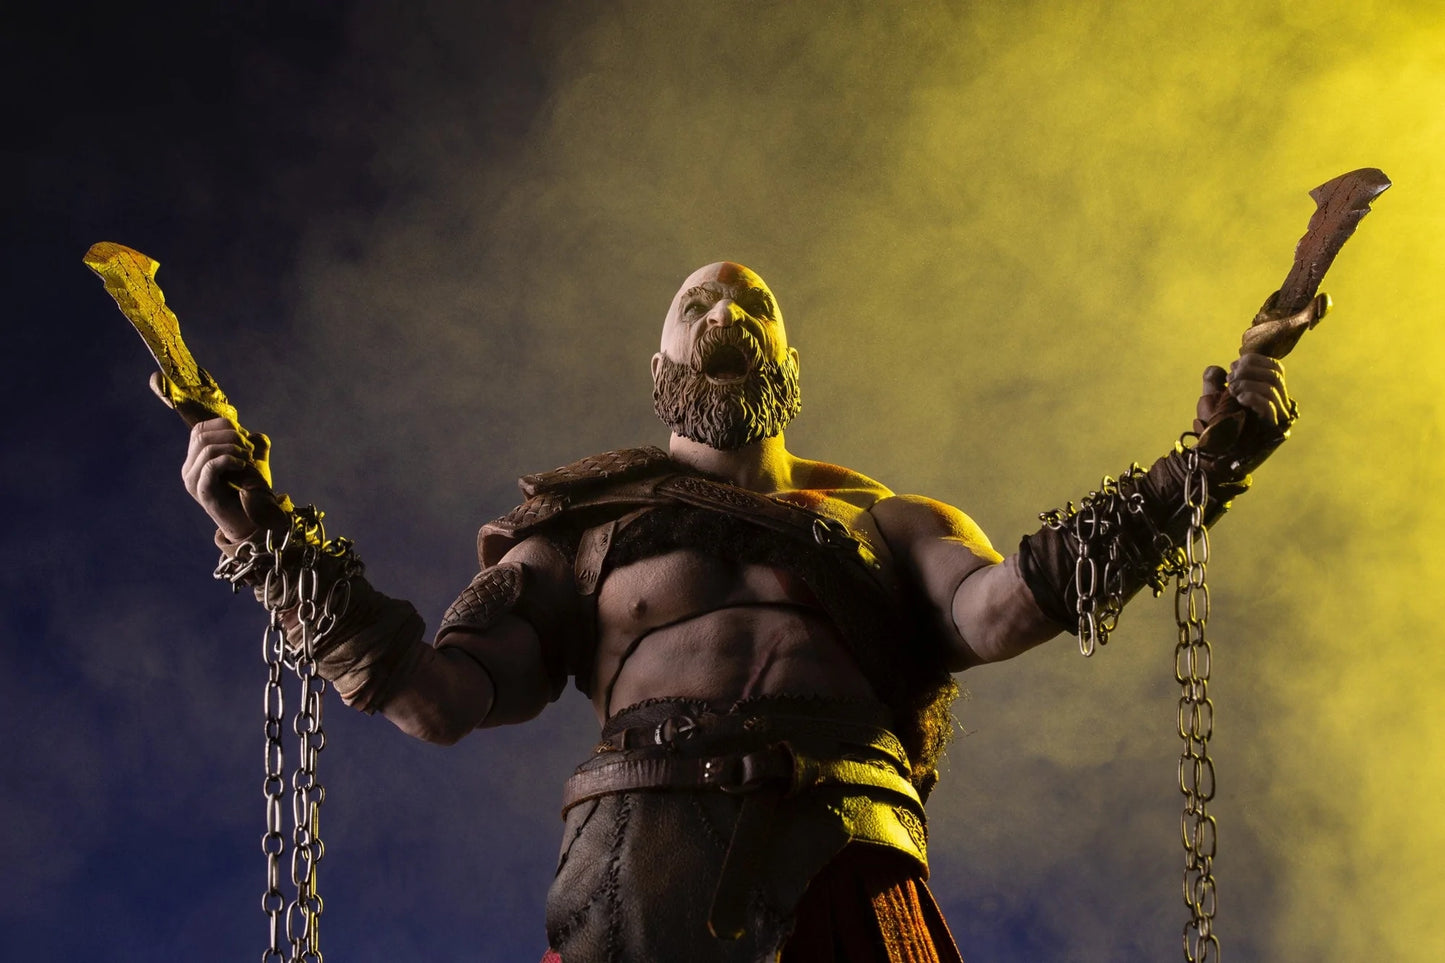 Kratos 1/6 - God of War Mondo